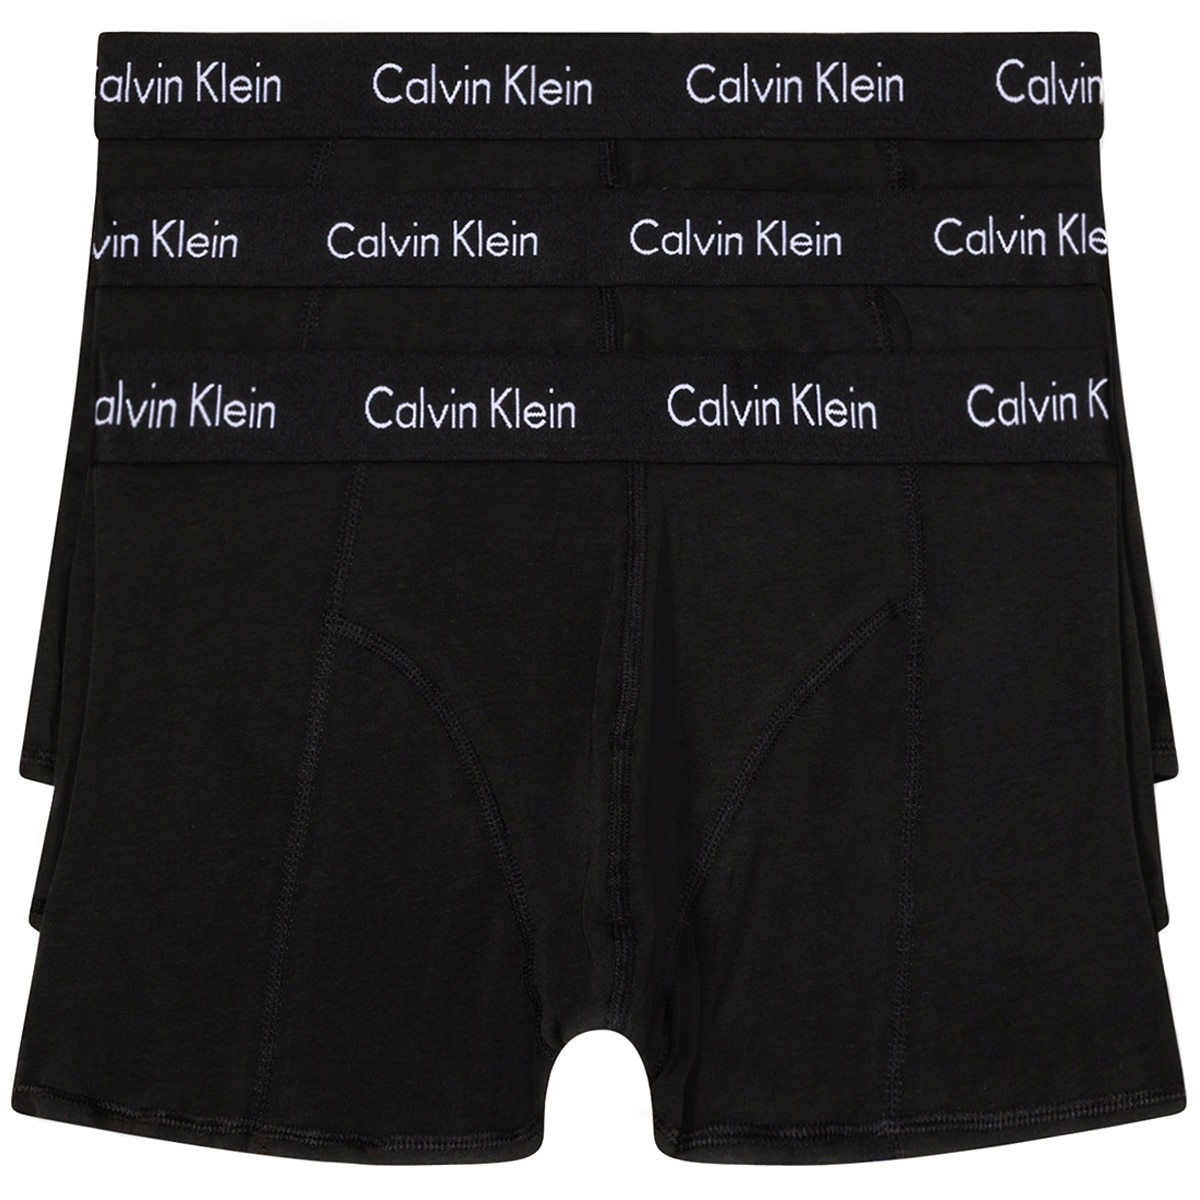 Costco CalvinKlein Men's Max Mesh Boxer Brief, 3-pack @ Costco 19.99